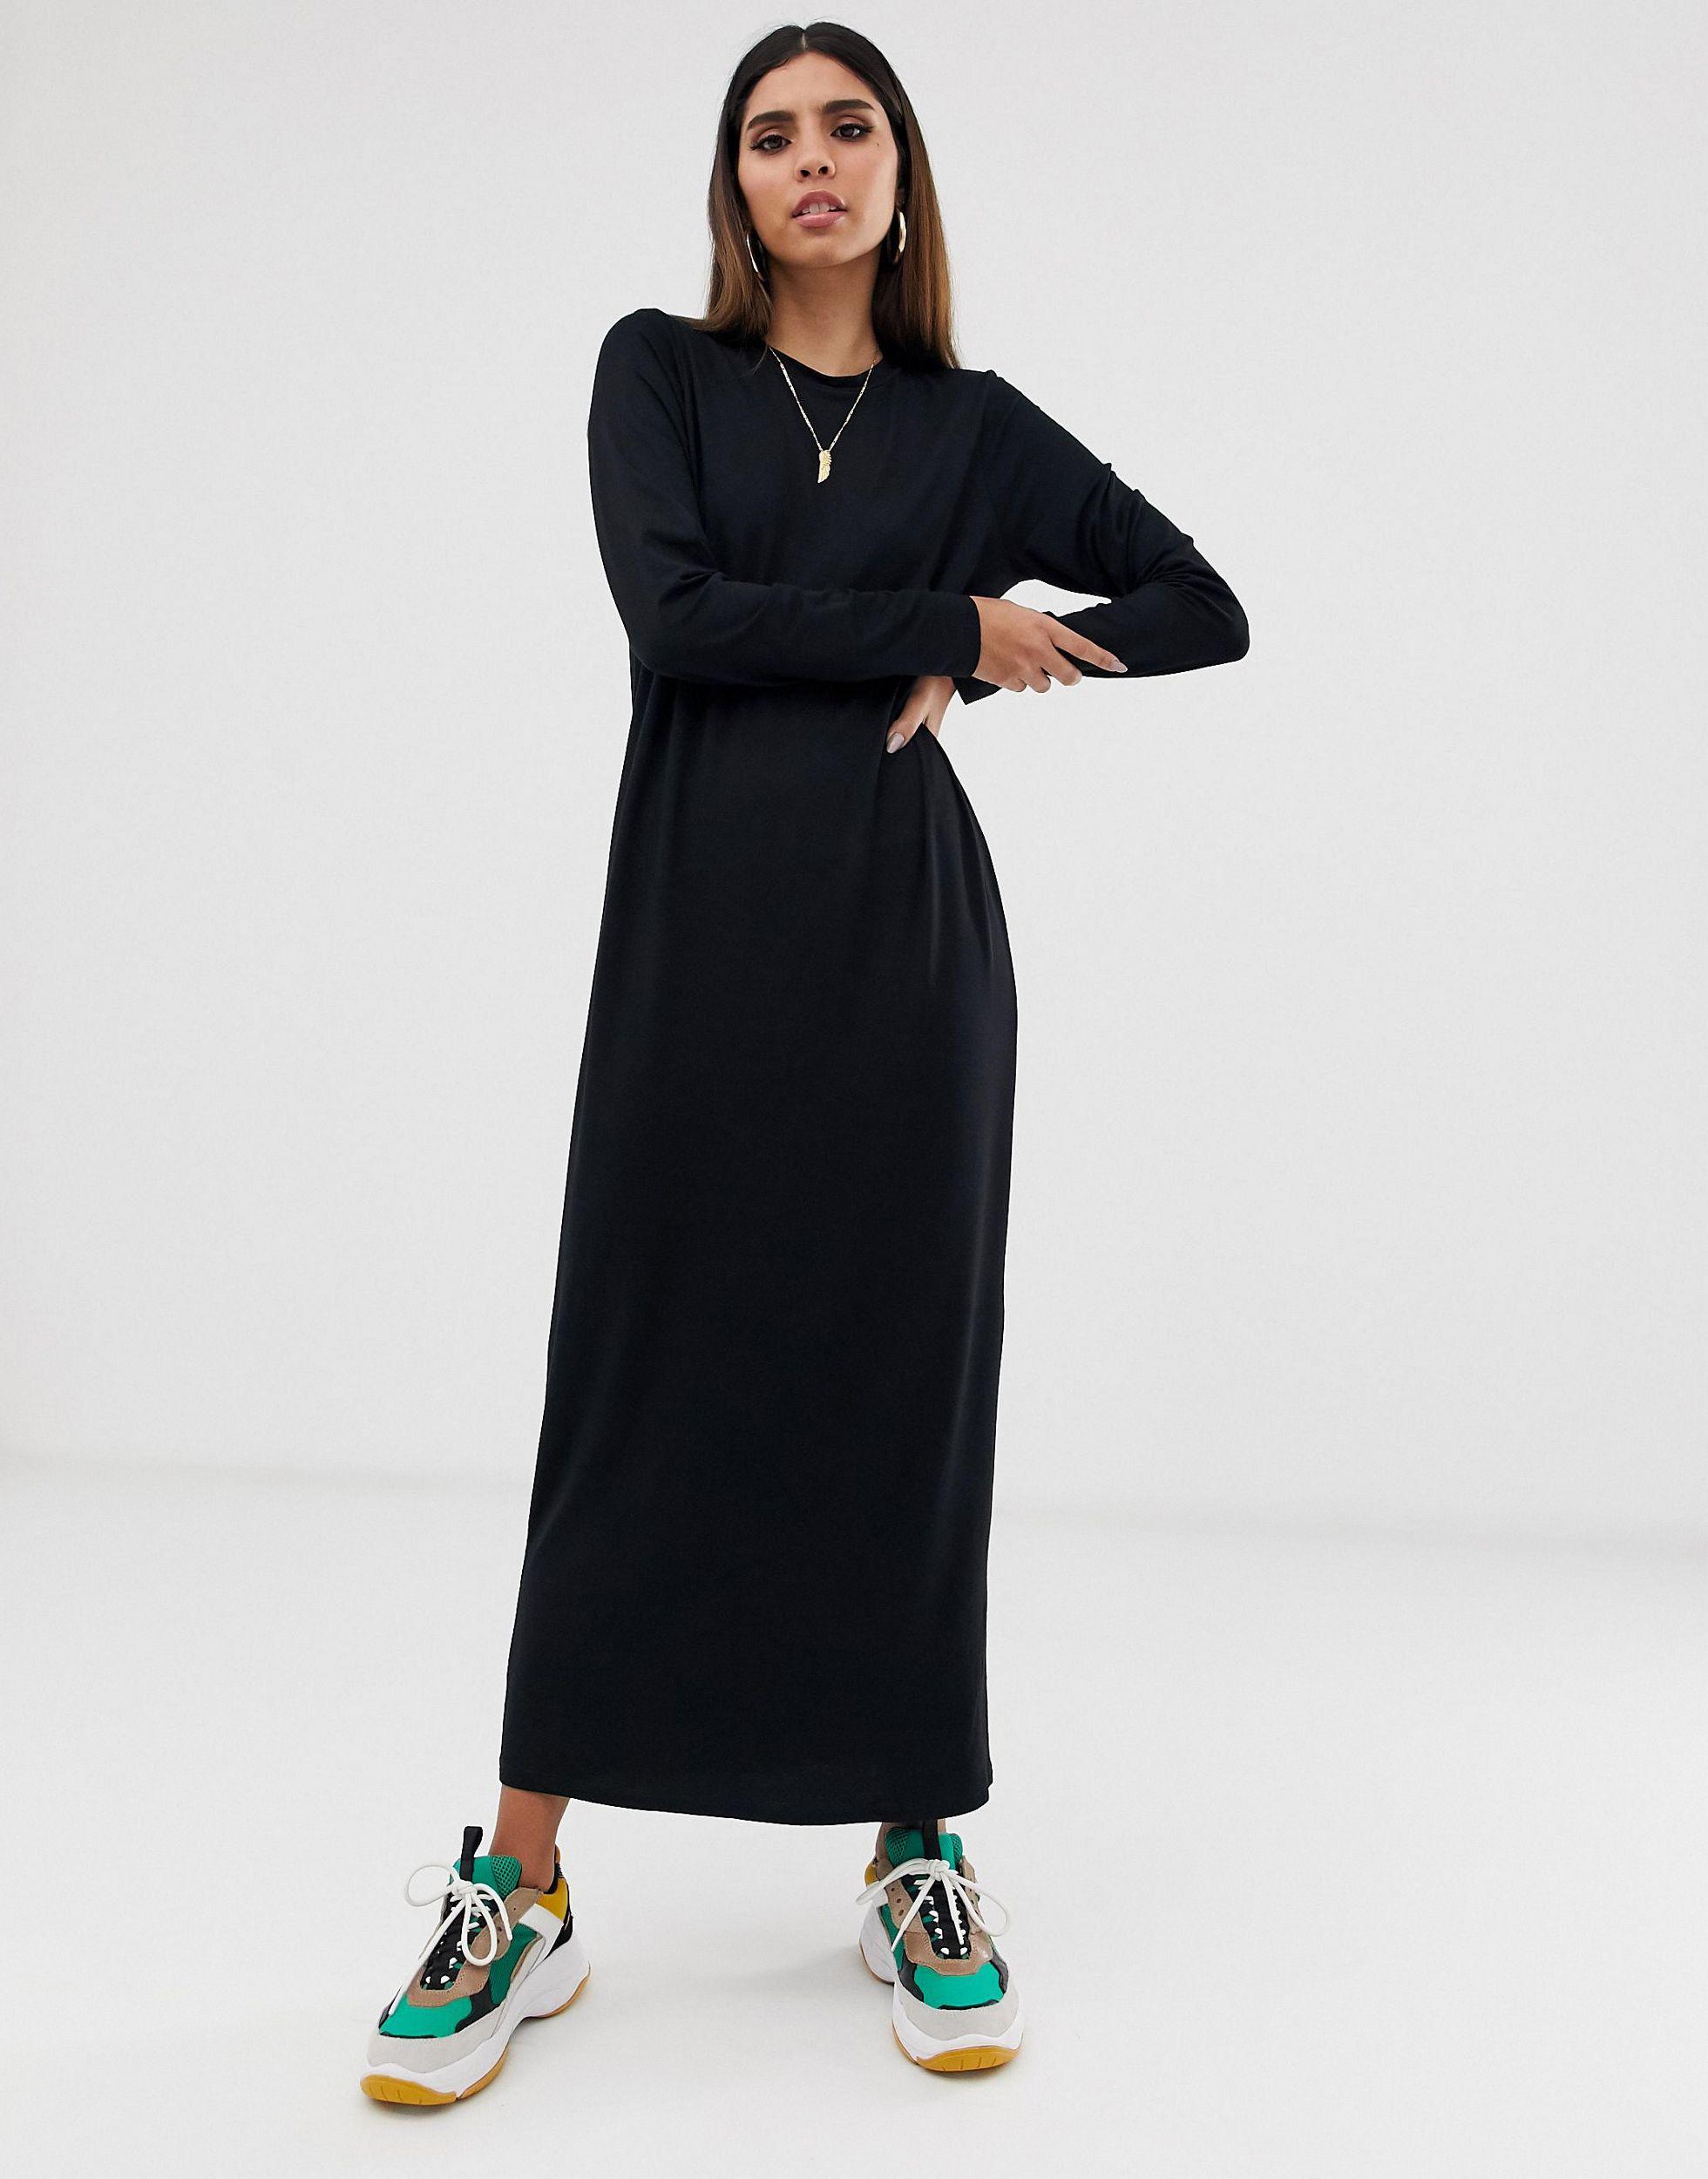 ASOS Synthetic Long Sleeve Maxi T-shirt Dress in Black - Lyst